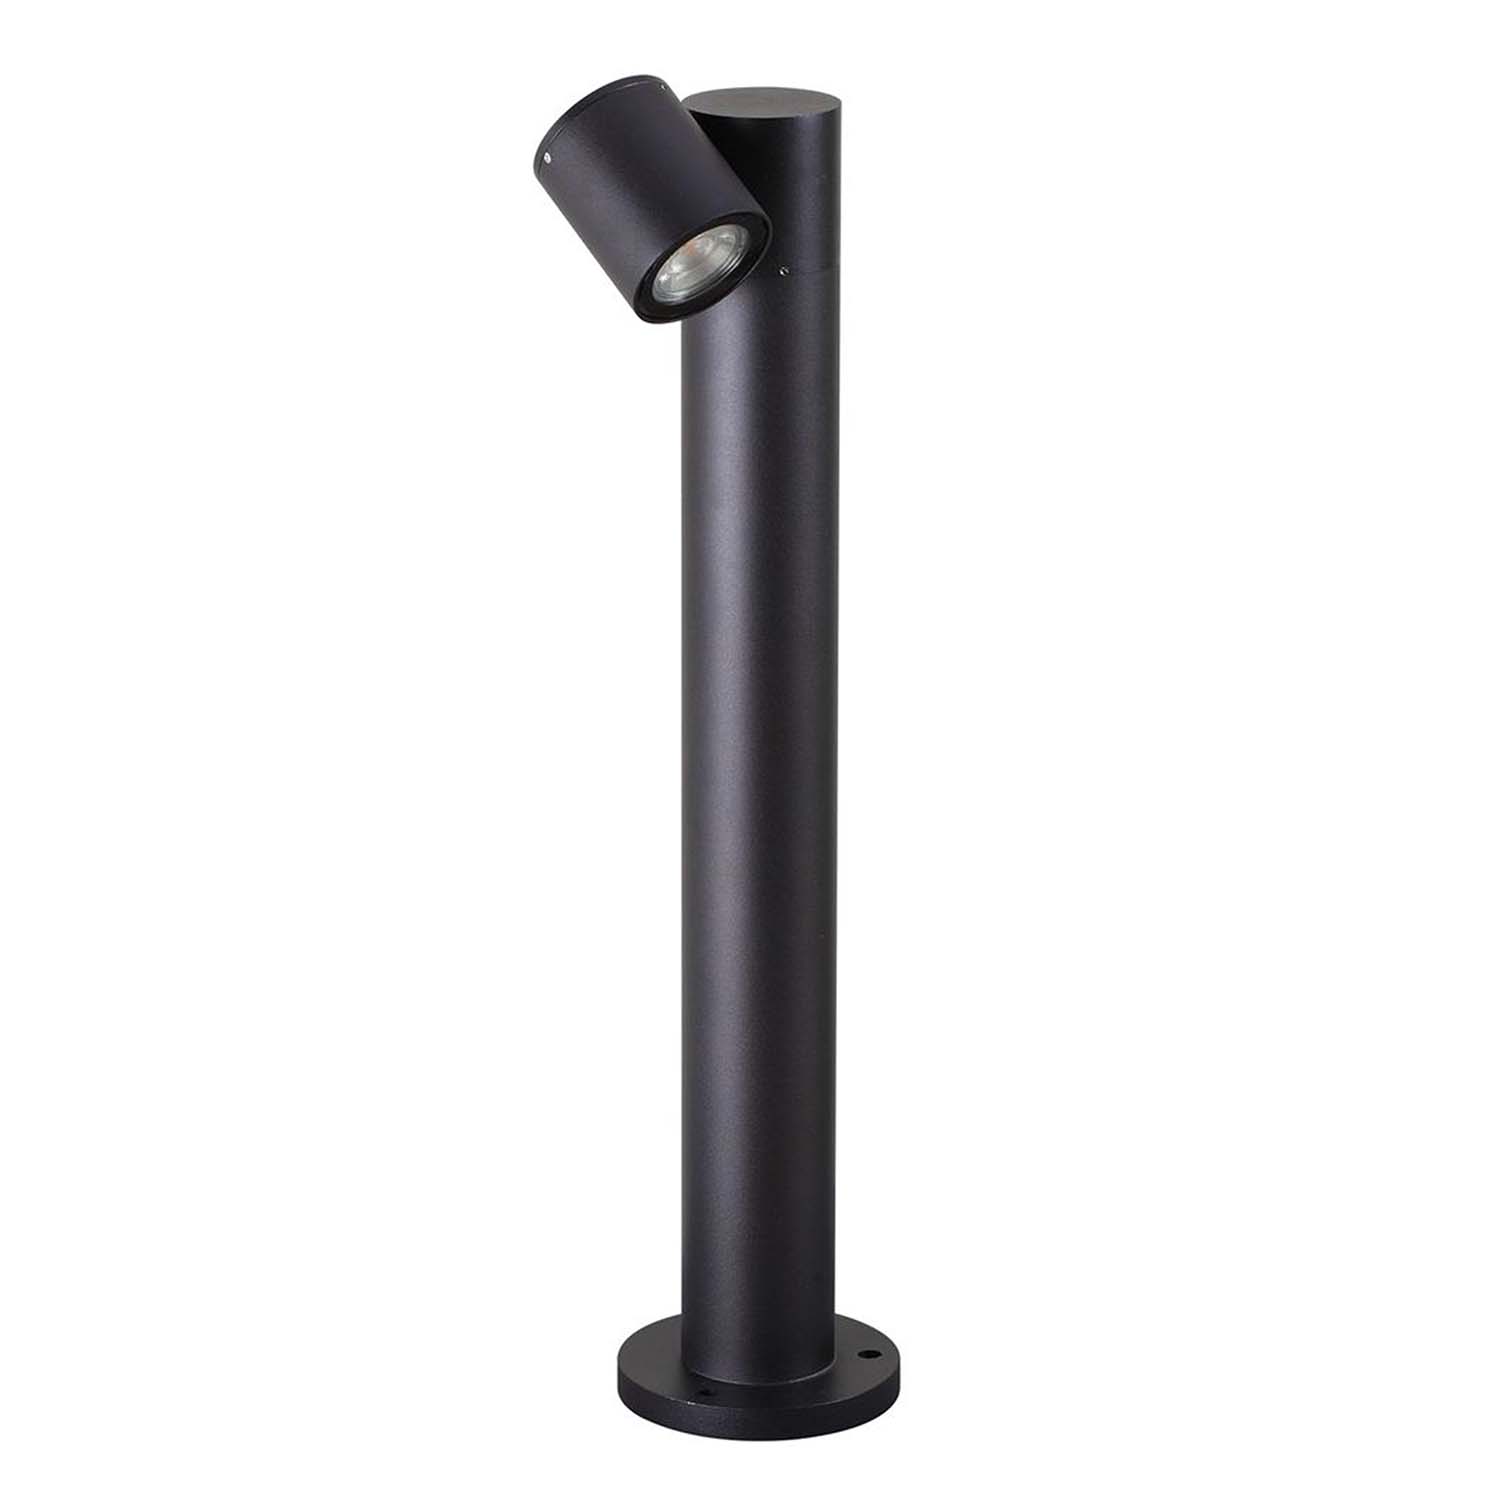 WALL STREET - Black outdoor projector lamp, waterproof and design